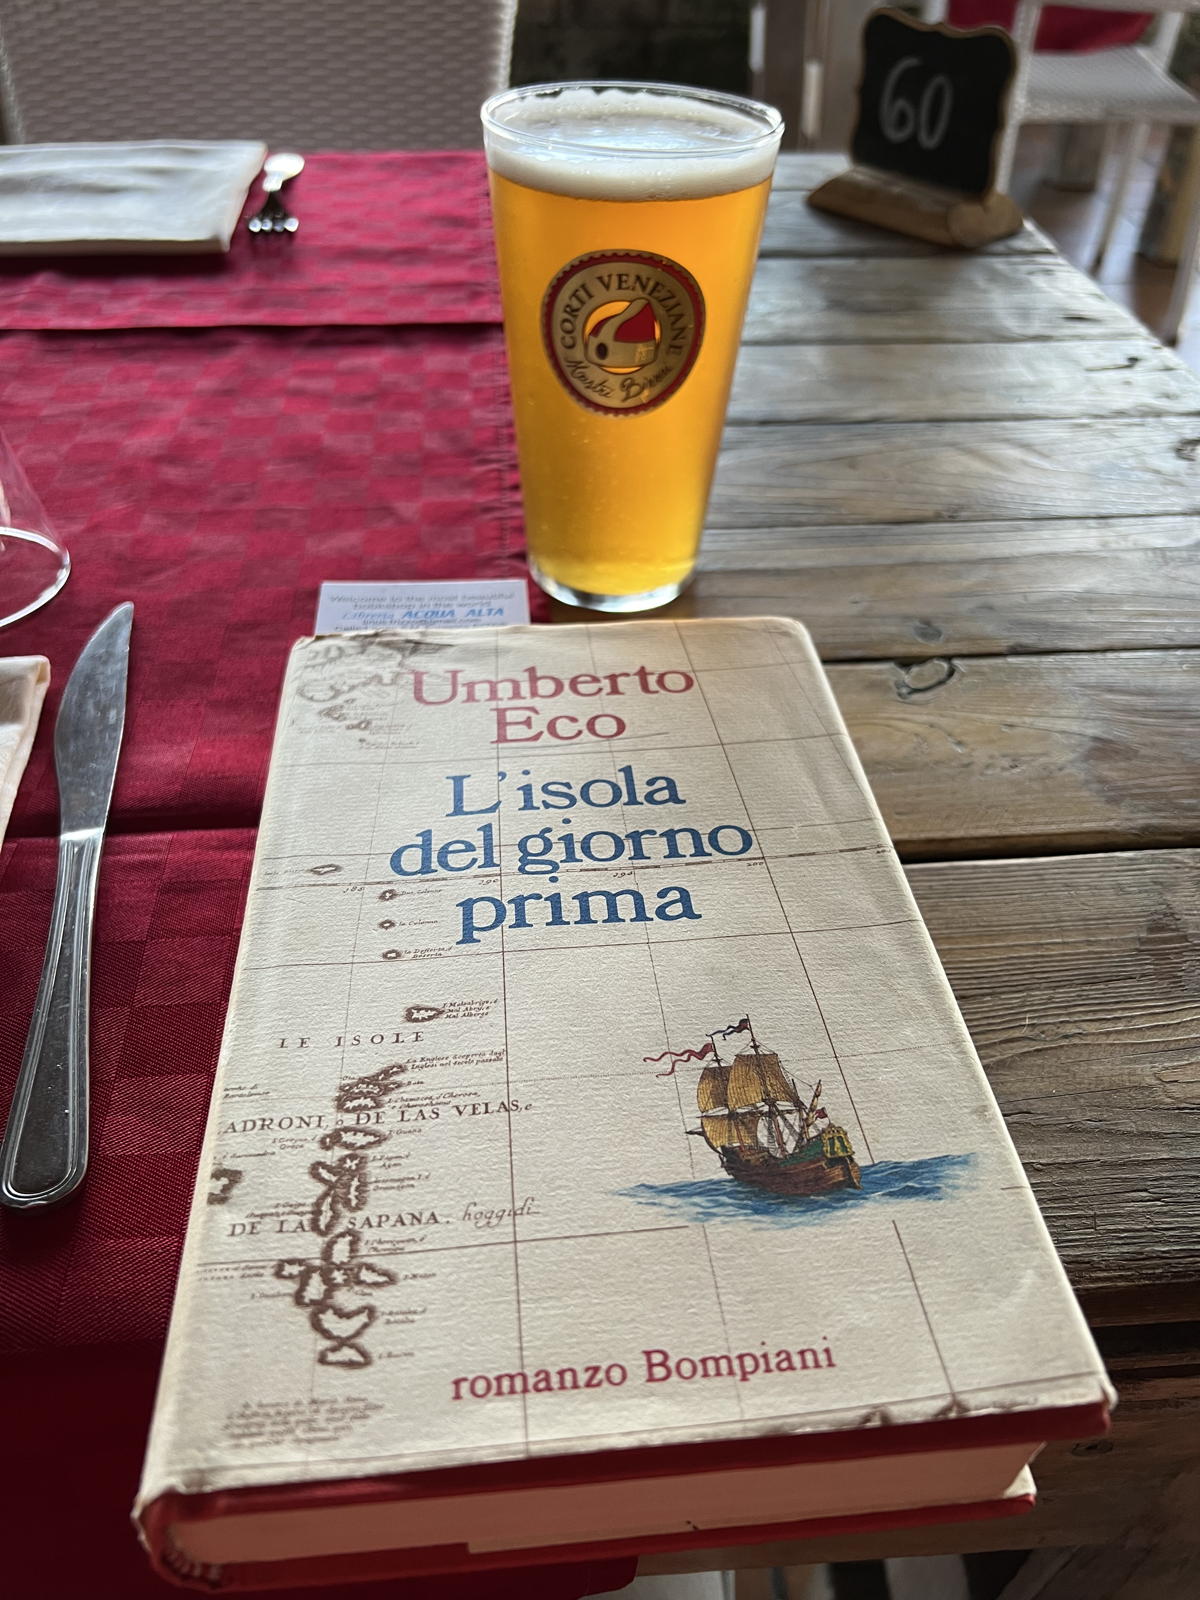 Italian beer with Umberto Eco: An Italian beer with Umberto Eco’s L’isola del giorno prima.; books; Italy; beer; Umberto Eco